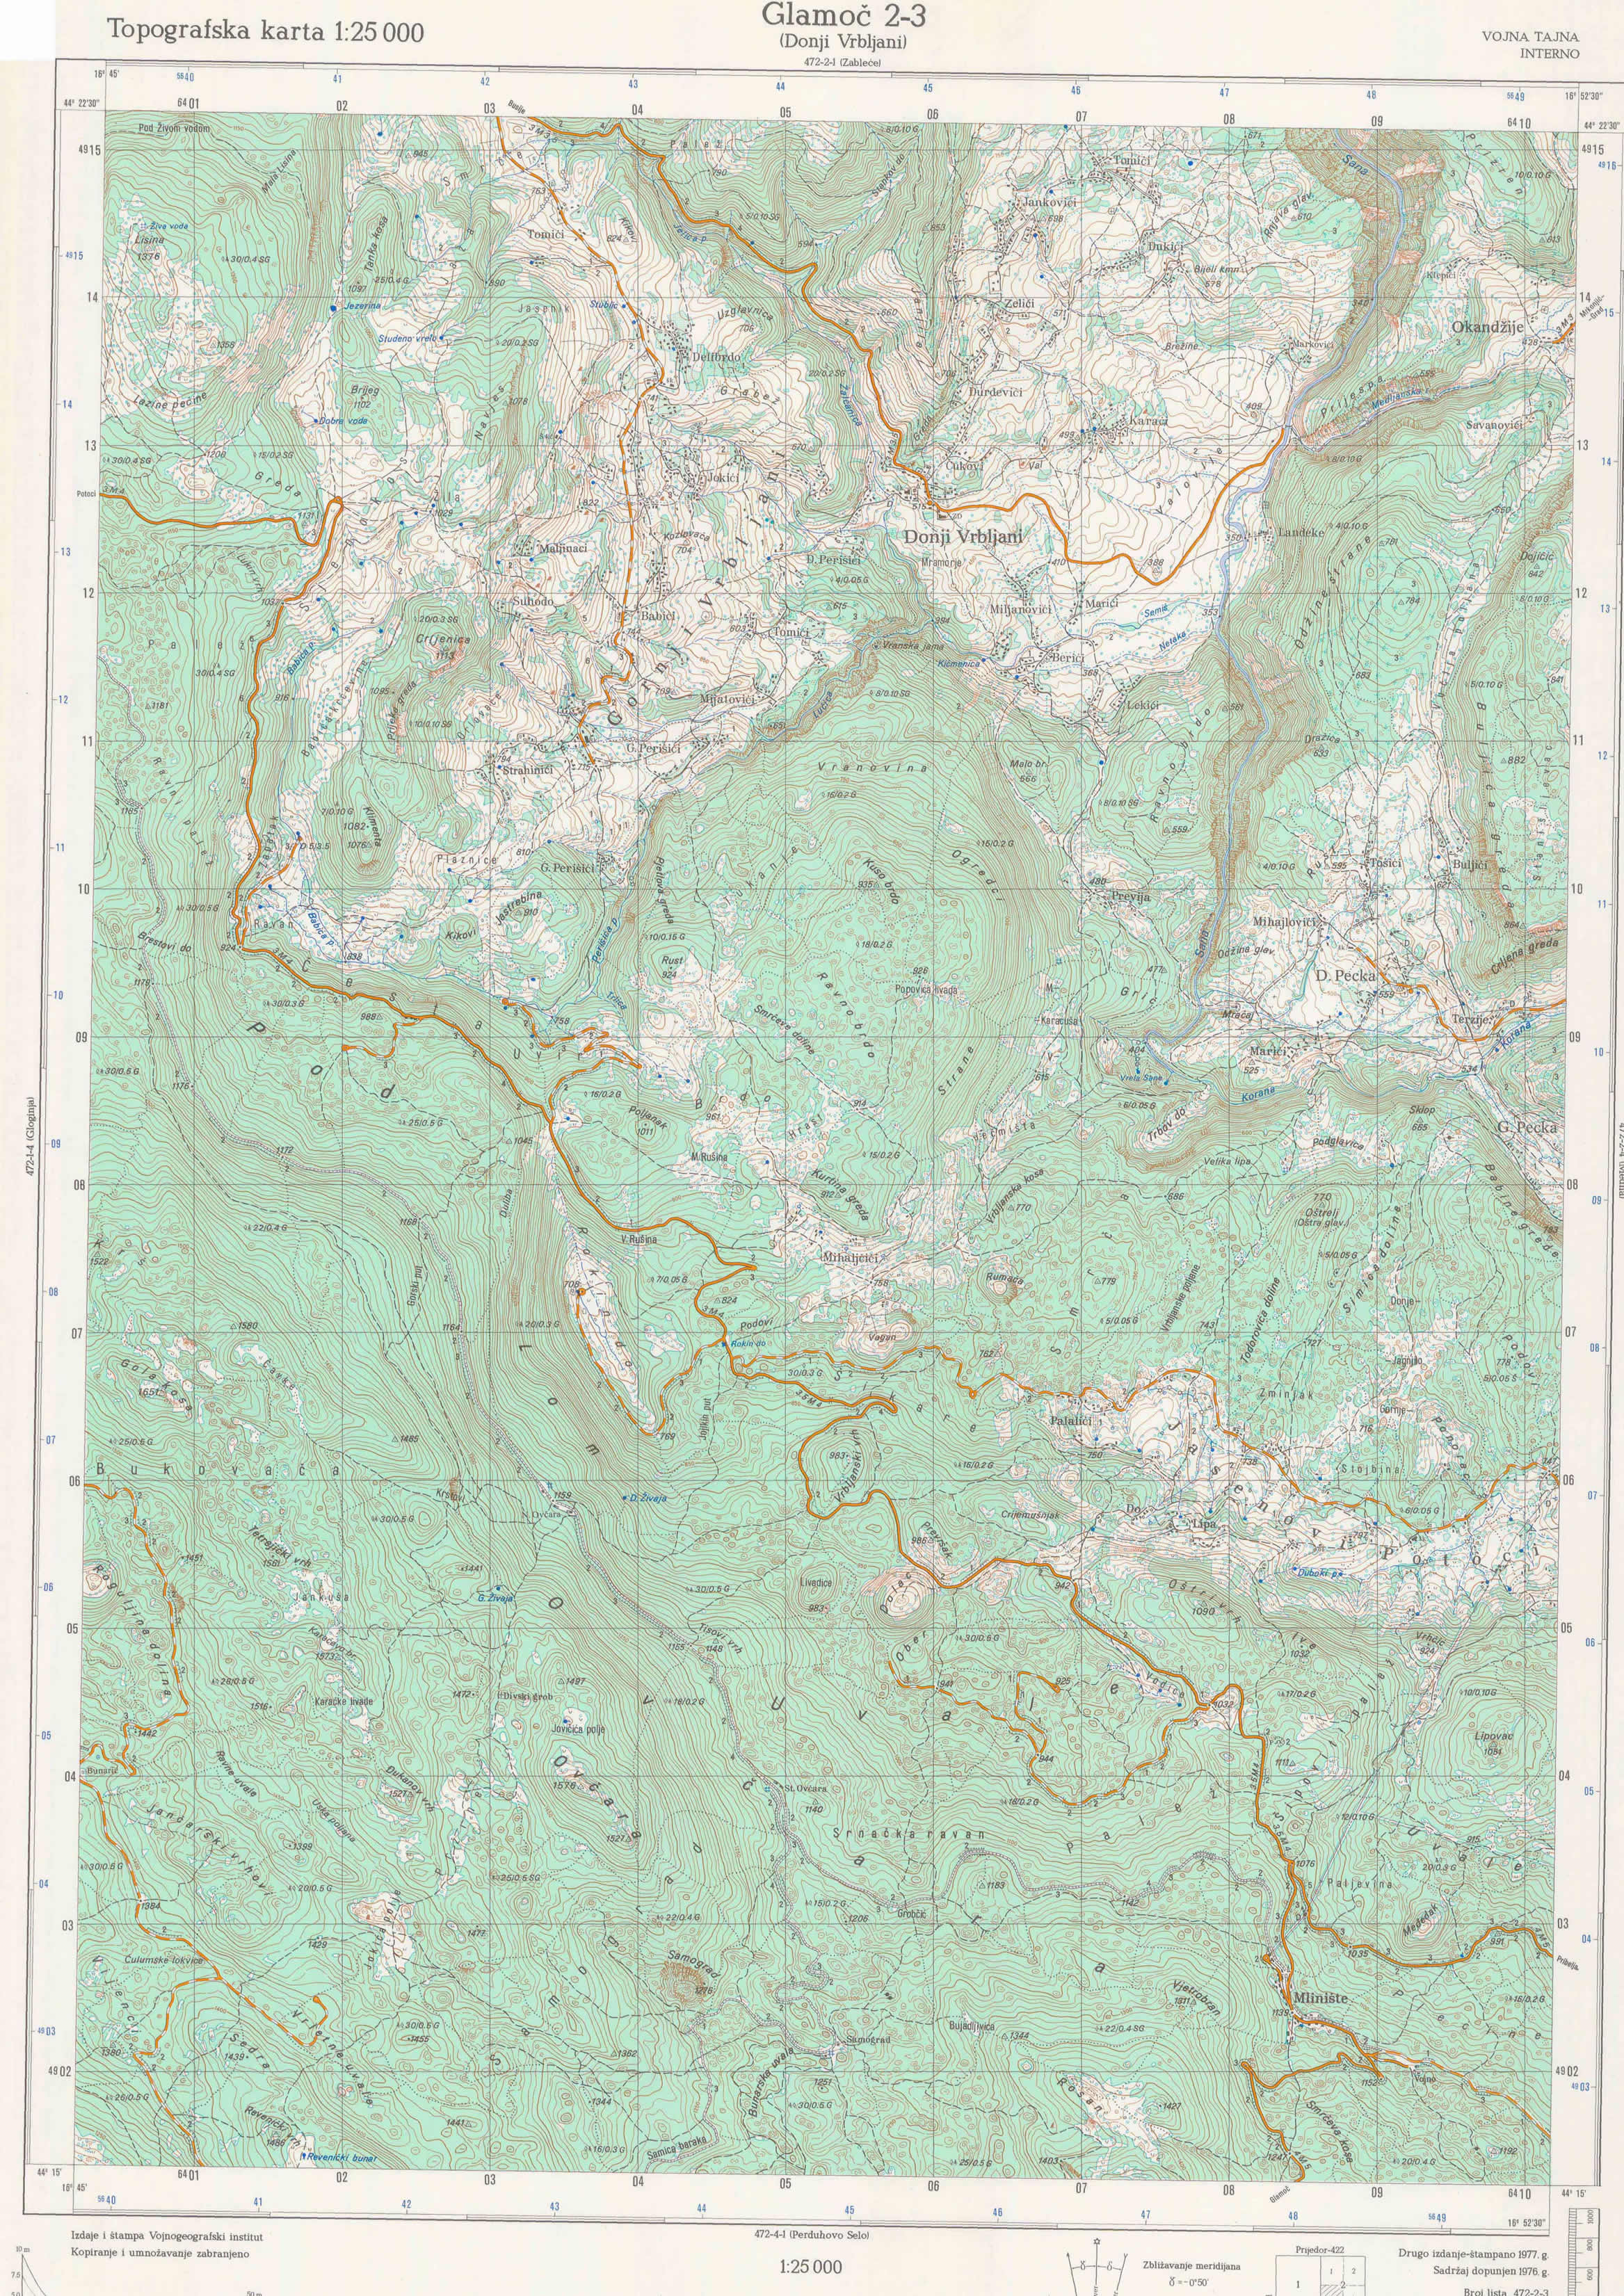  topografska karta BiH 25000 JNA  donji vrbljani